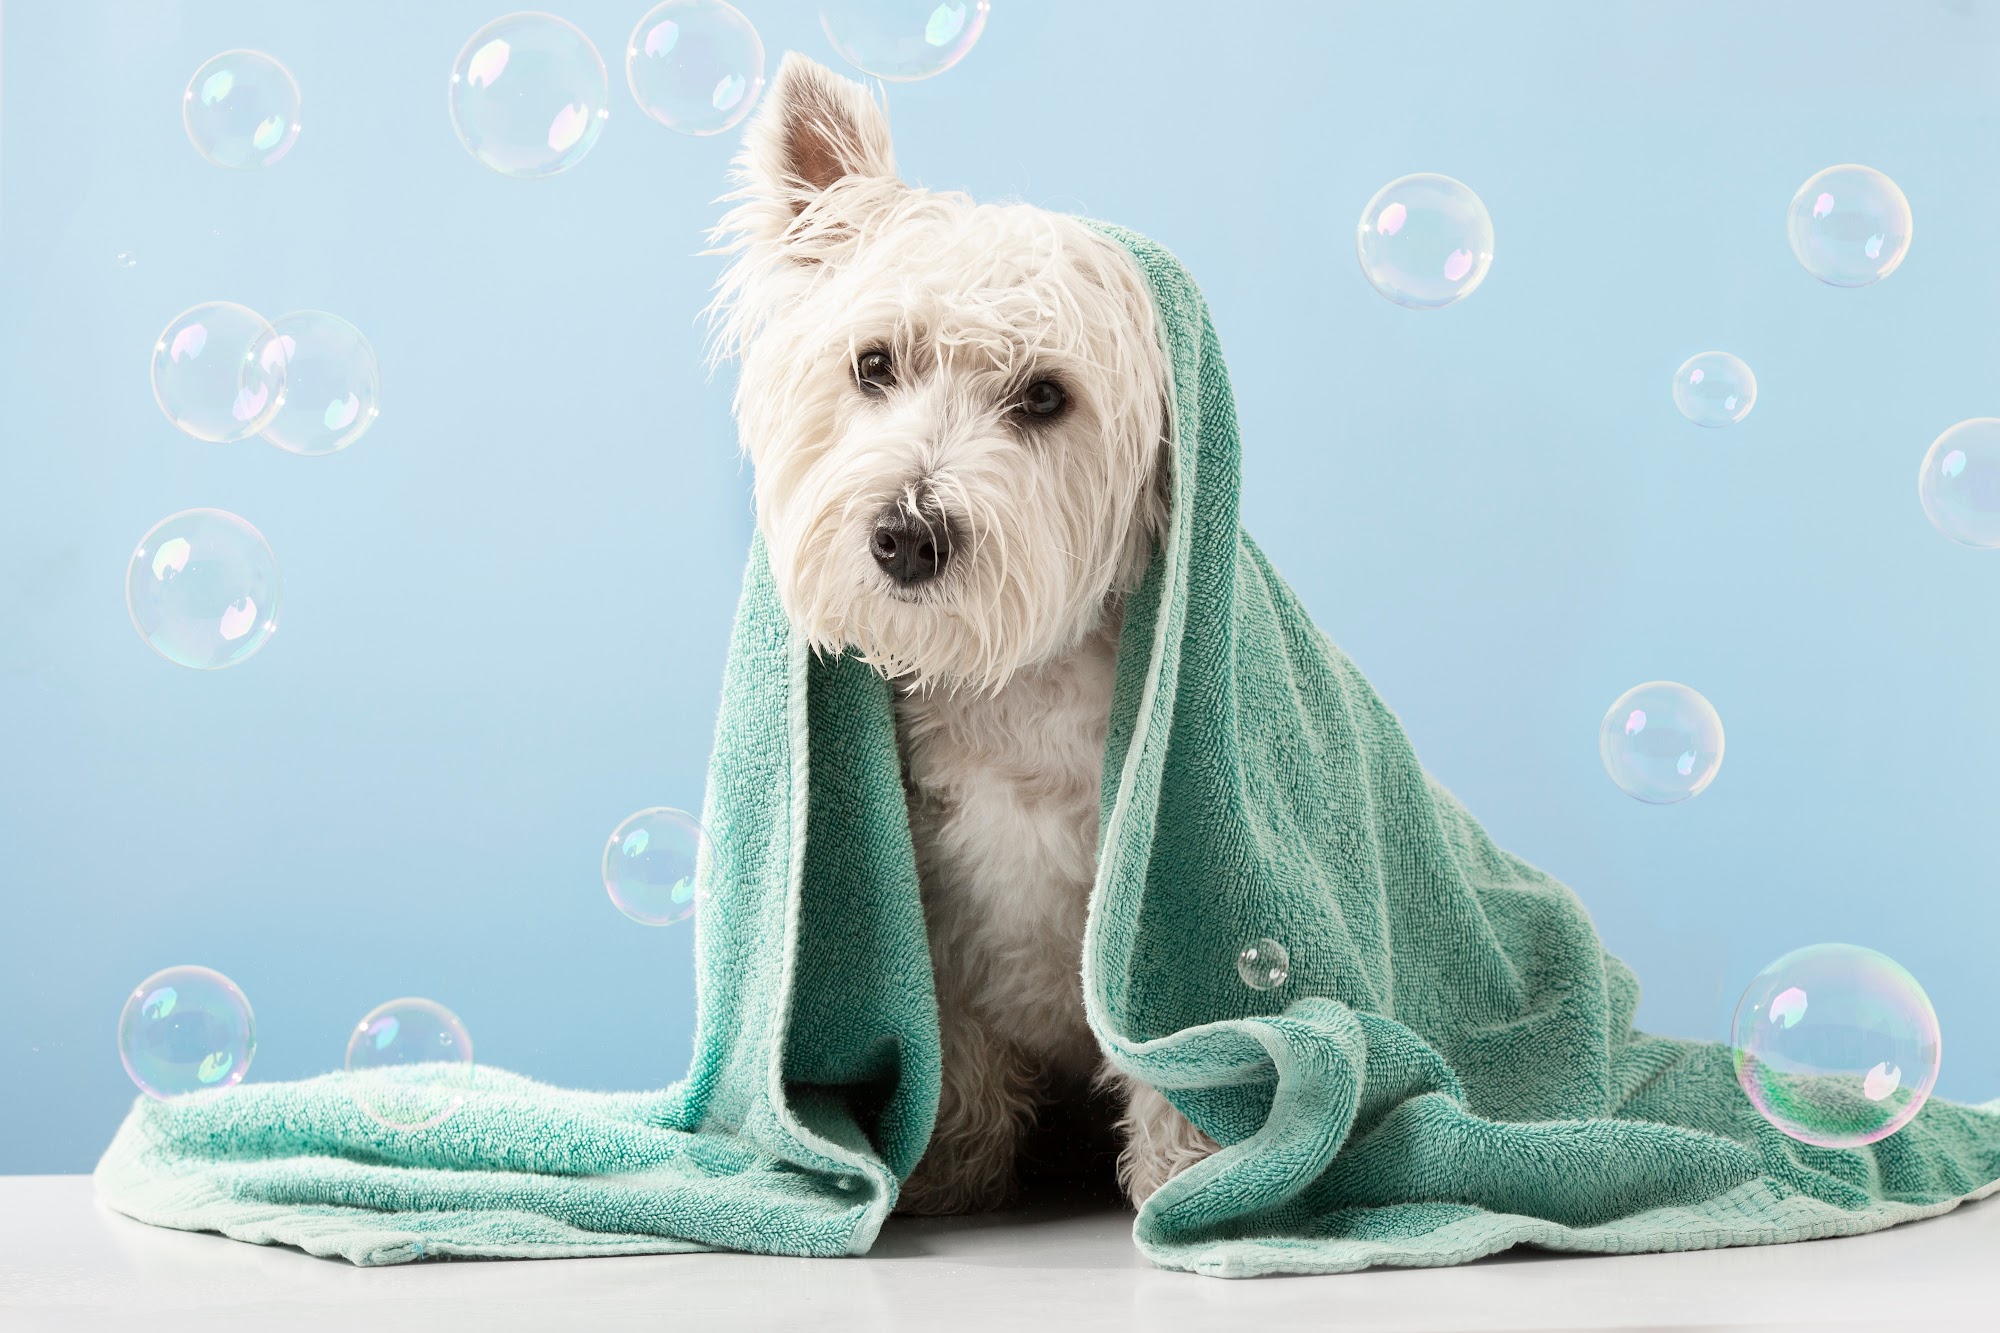 The Bubble Lounge Dog Spa